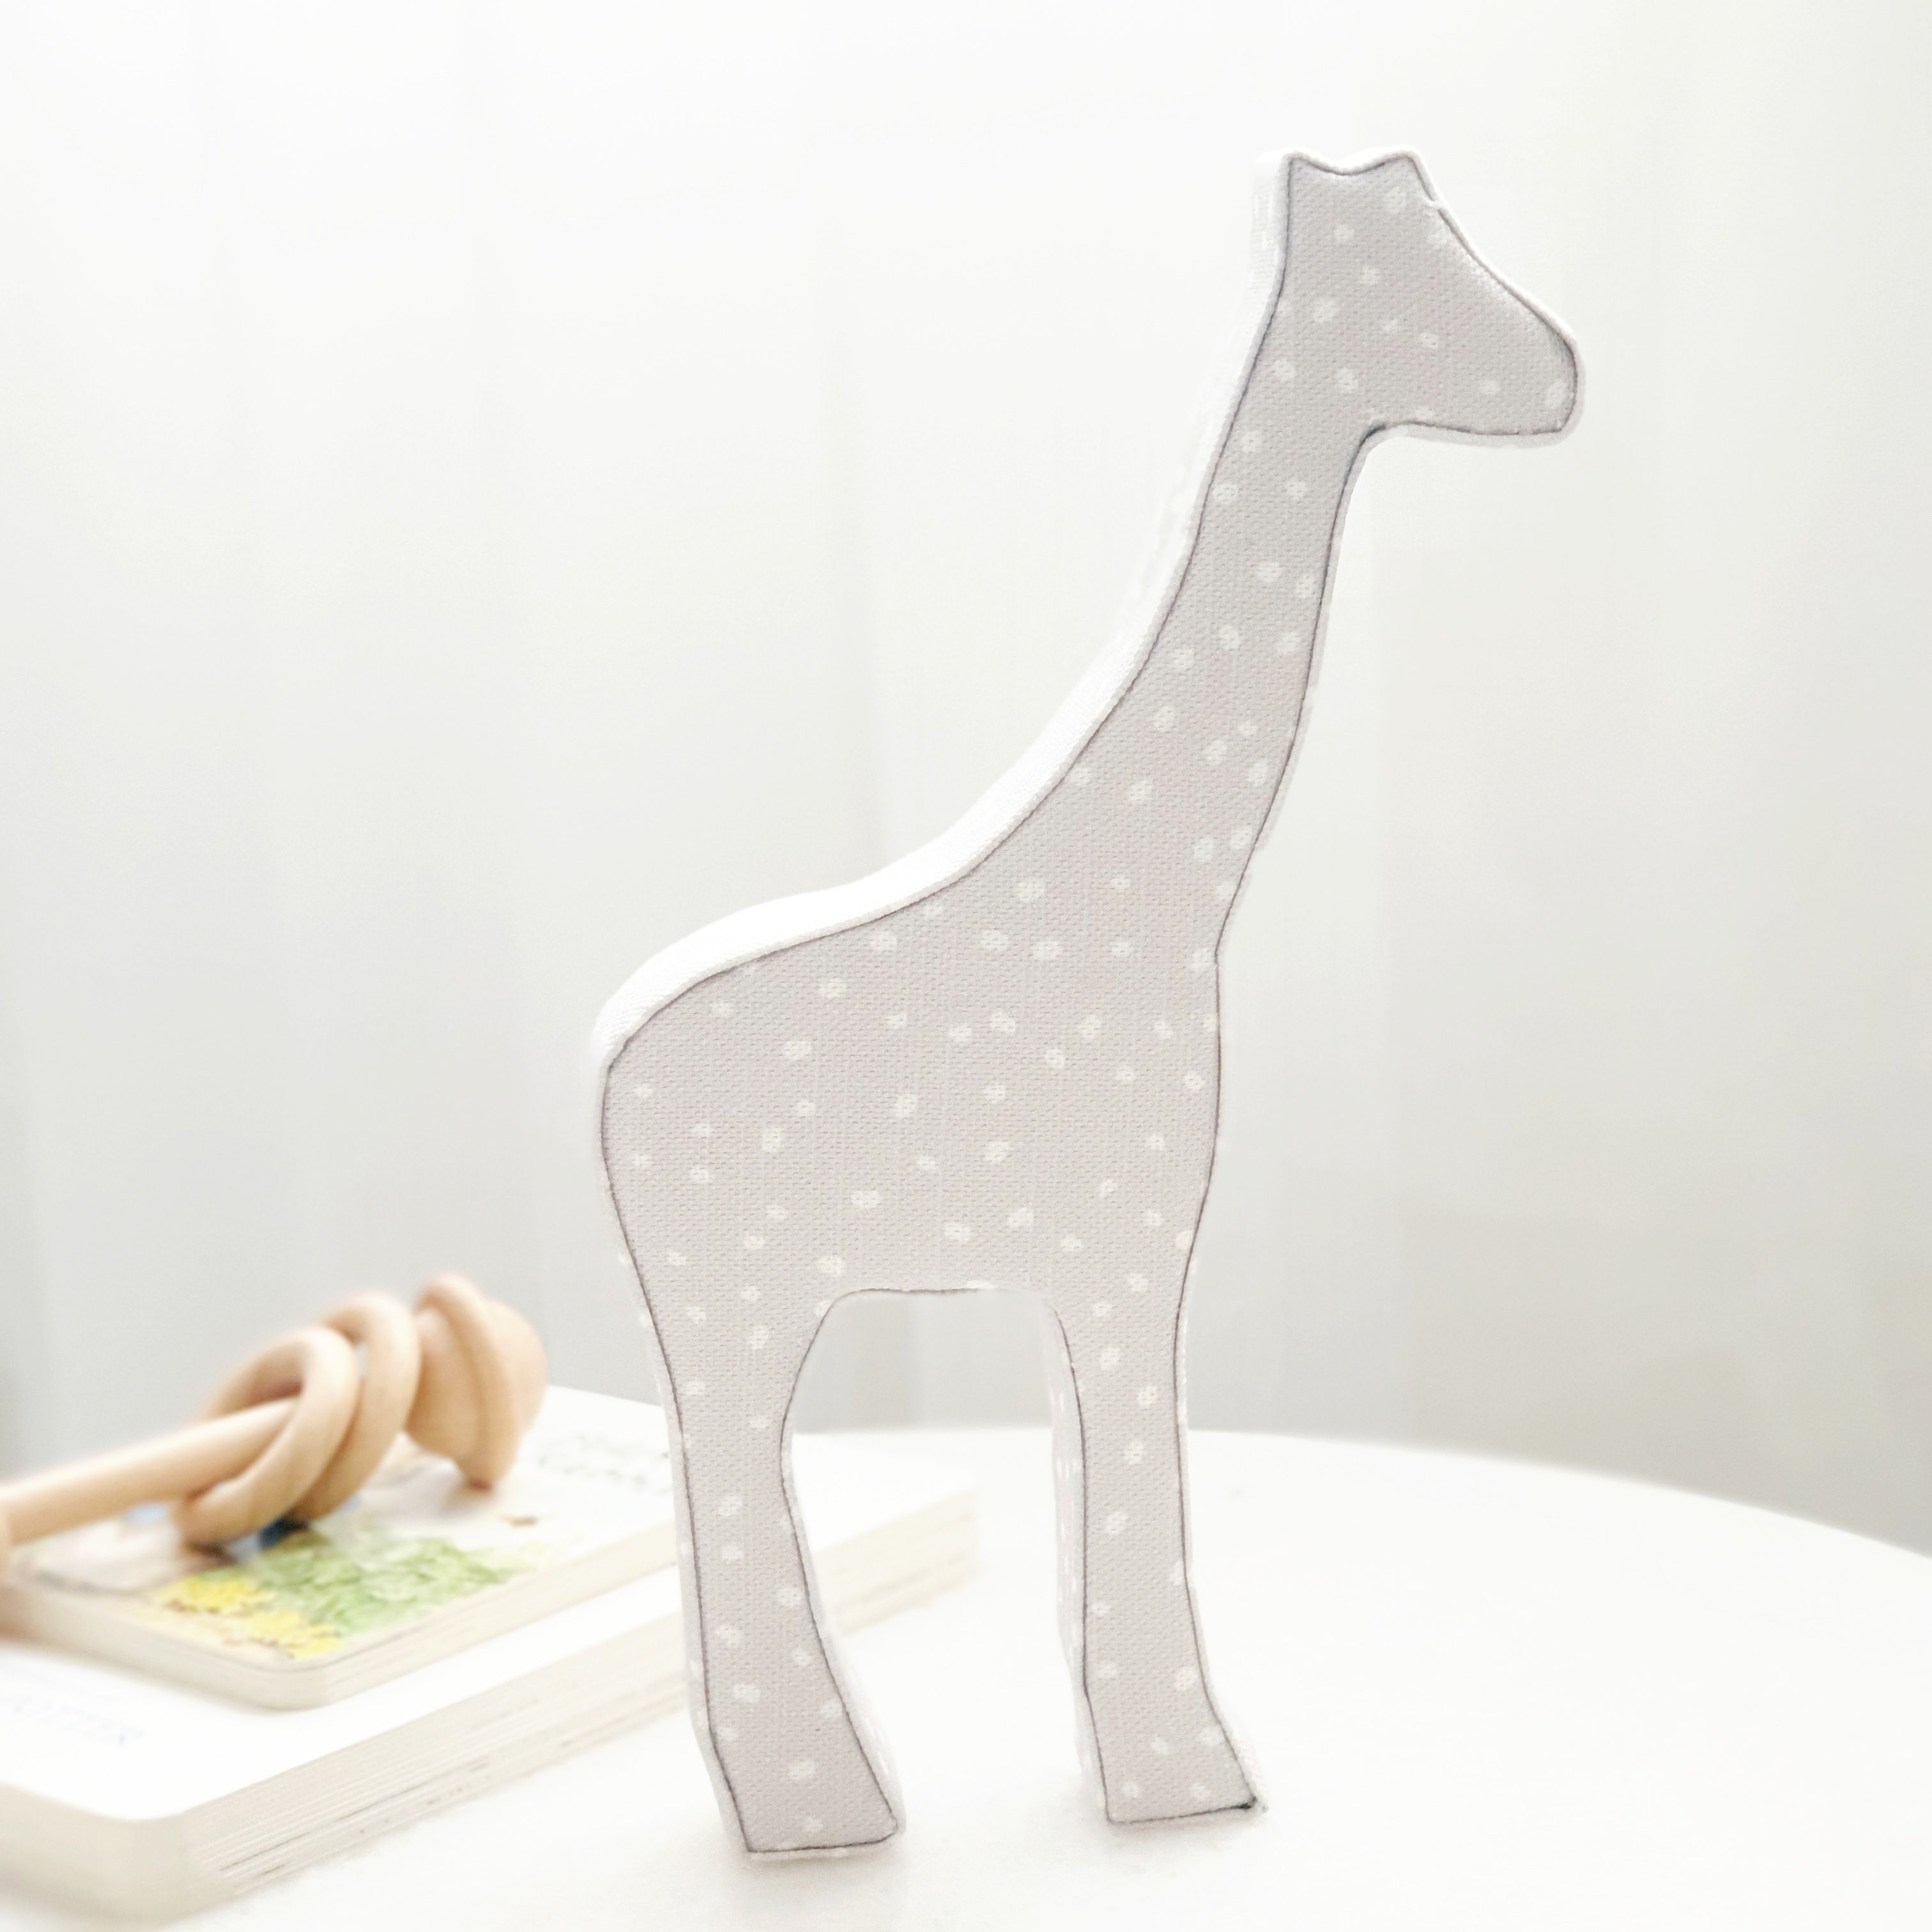 Giraffe - Ornament